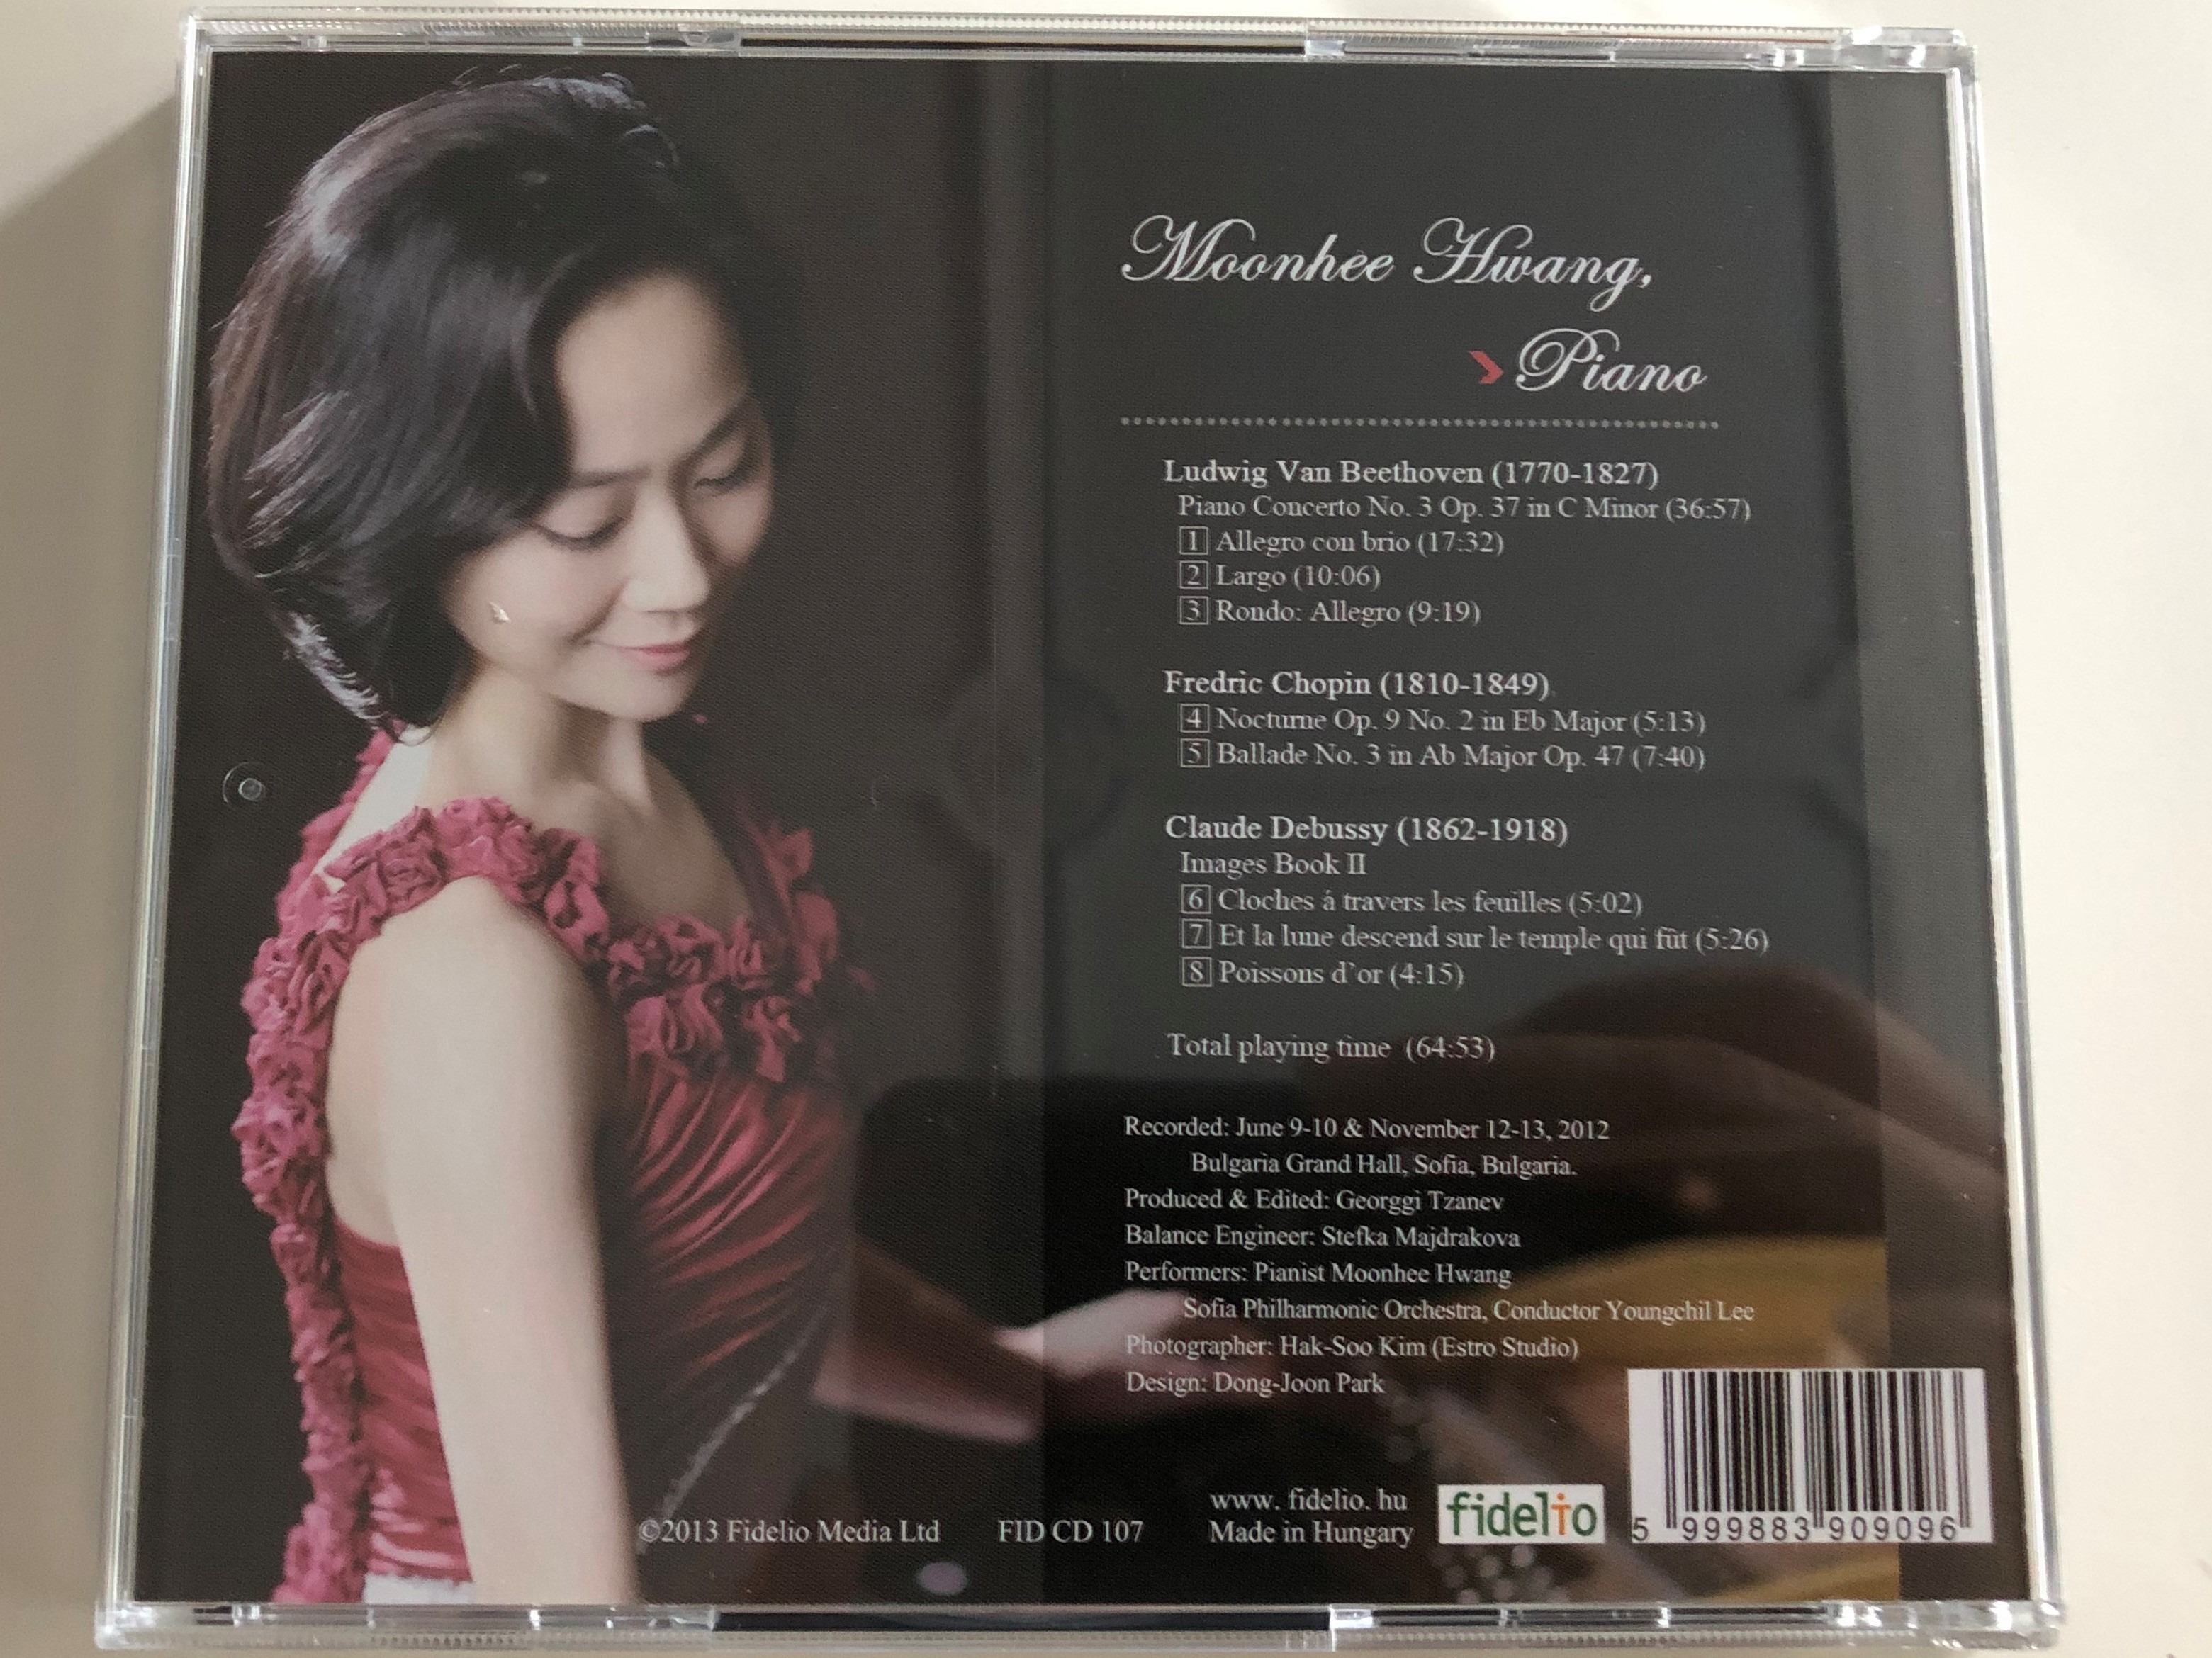 -moonhee-hwang-piano-beethoven-concerto-no.-3-op.-37-in-c-minor-chopin-nocturne-op.-9-no.-2-in-eb-major-ballade-no.-3-in-ab-major.-op.-47-debussy-images-book-ii-audio-cd-2013-fidelio-fid-cd-107-7-.jpg